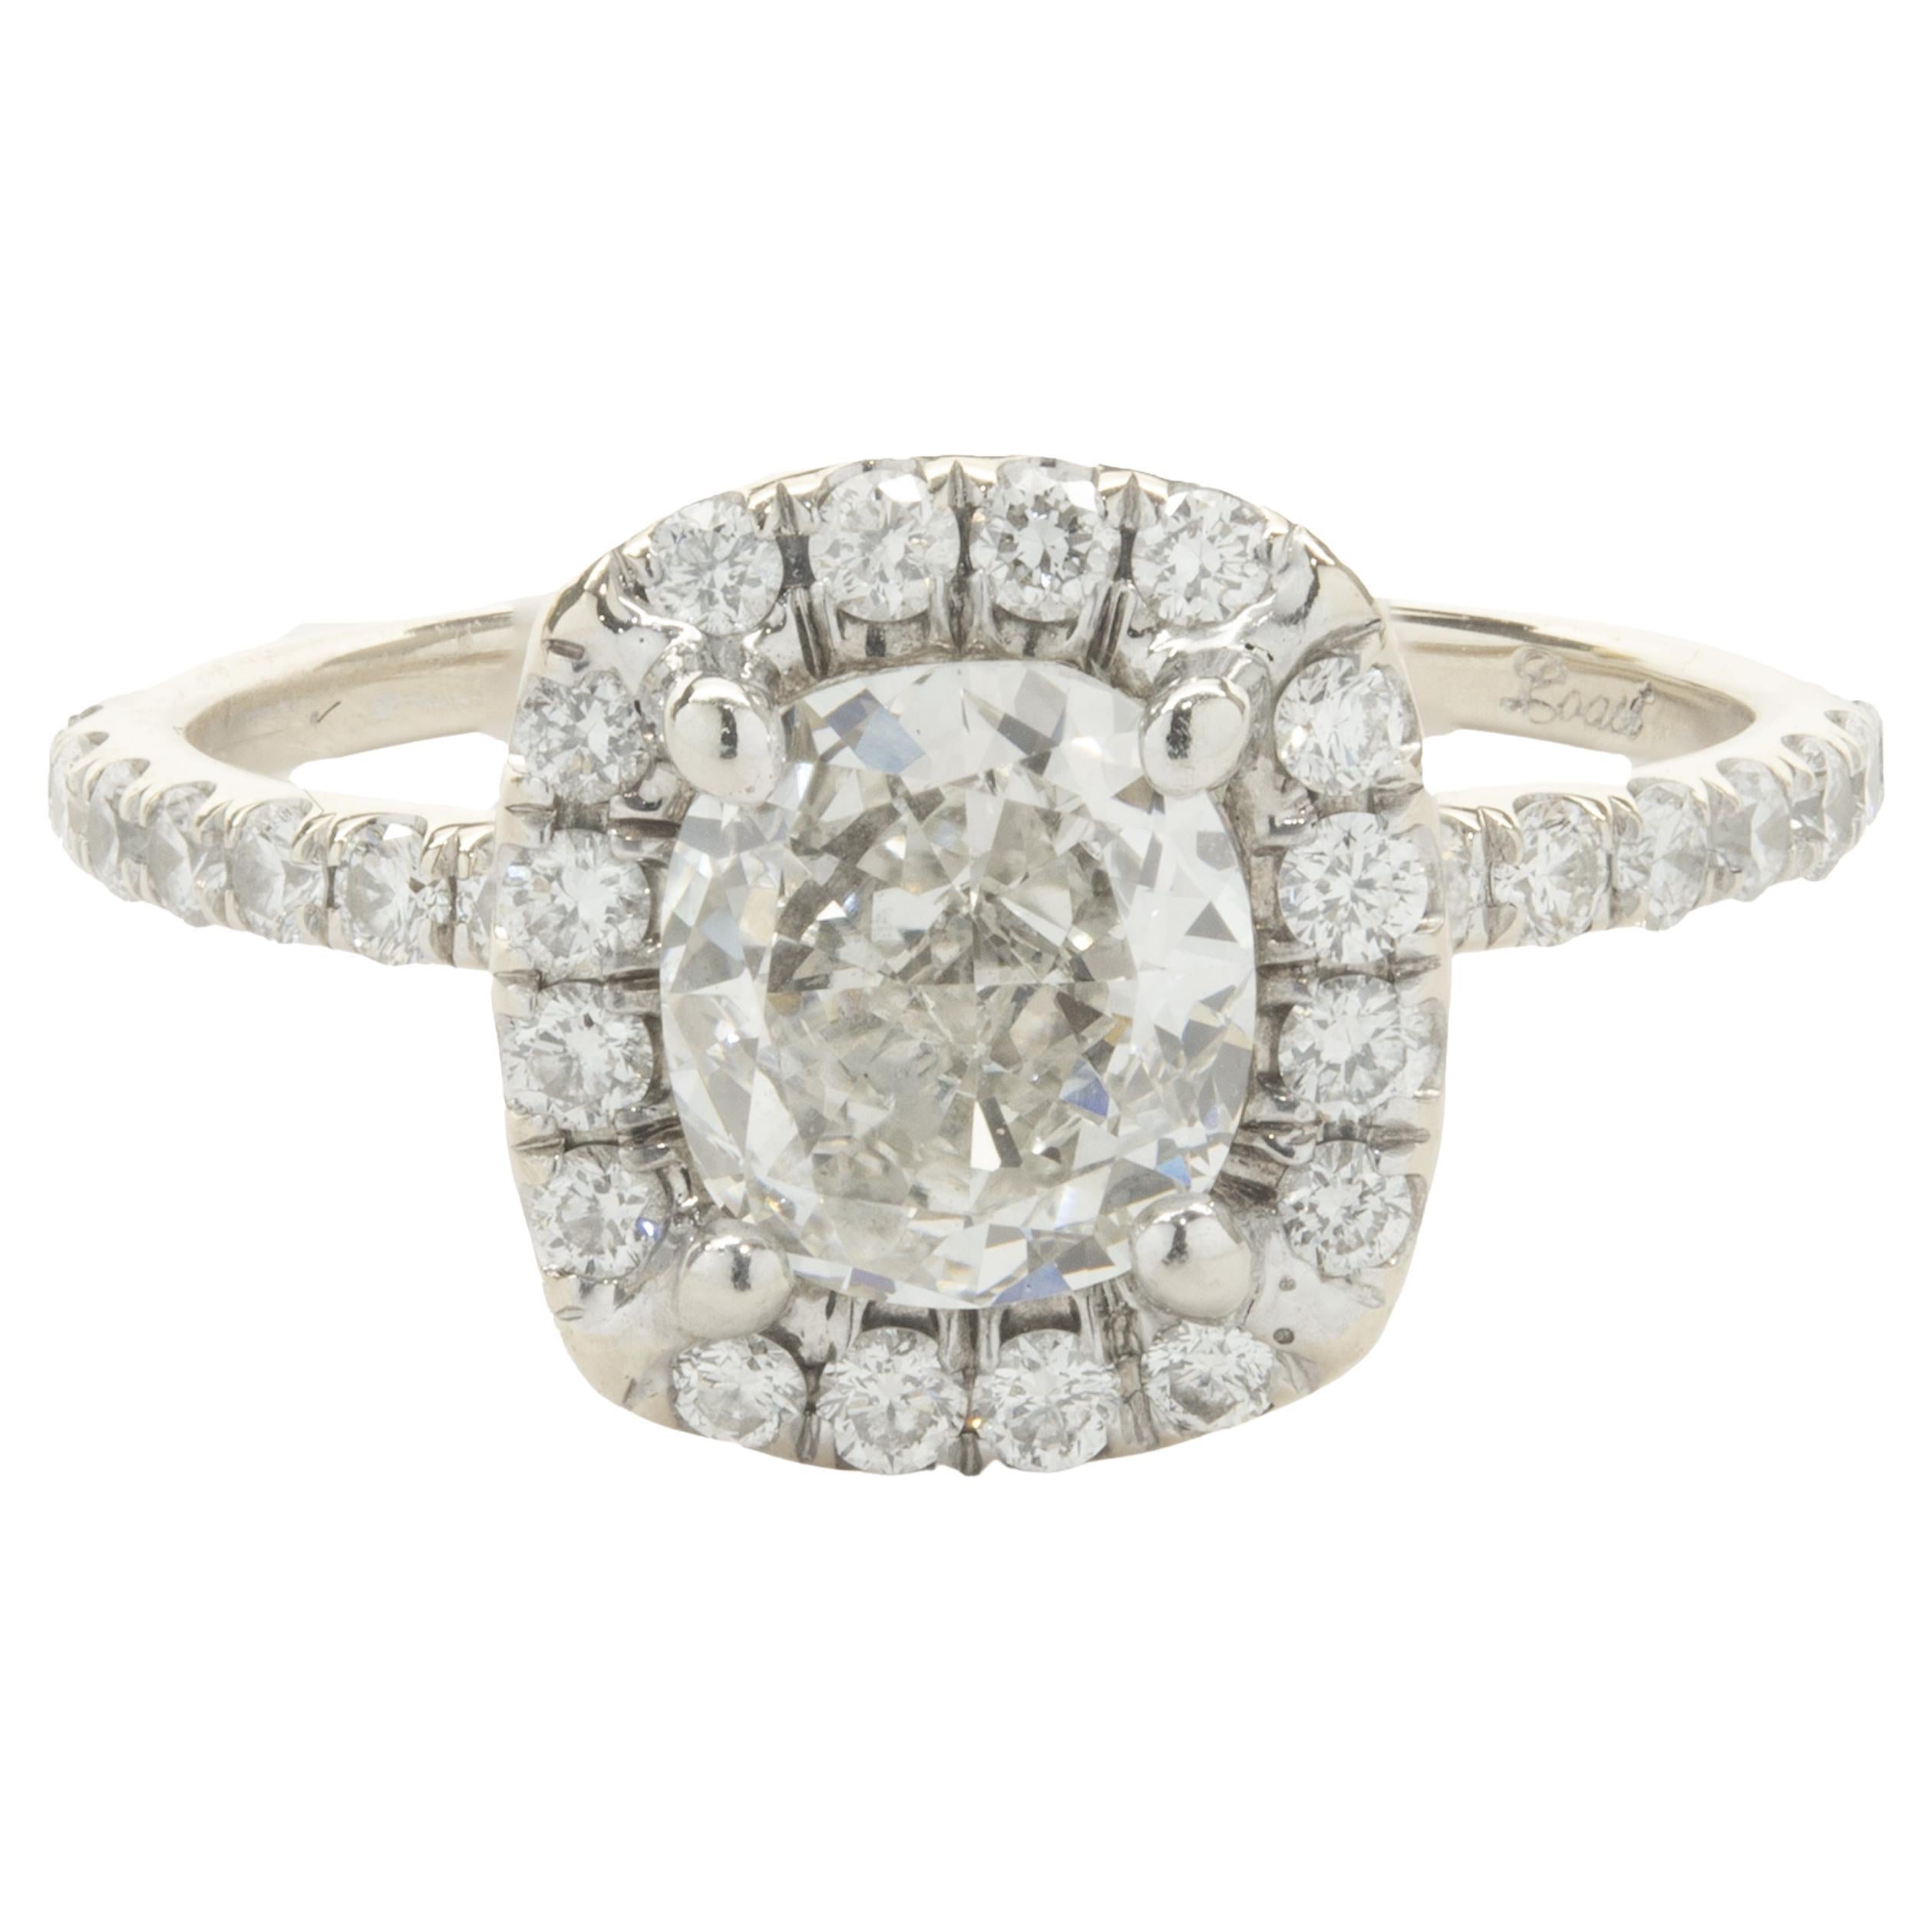 Platinum Cushion Cut Diamond Engagement Ring